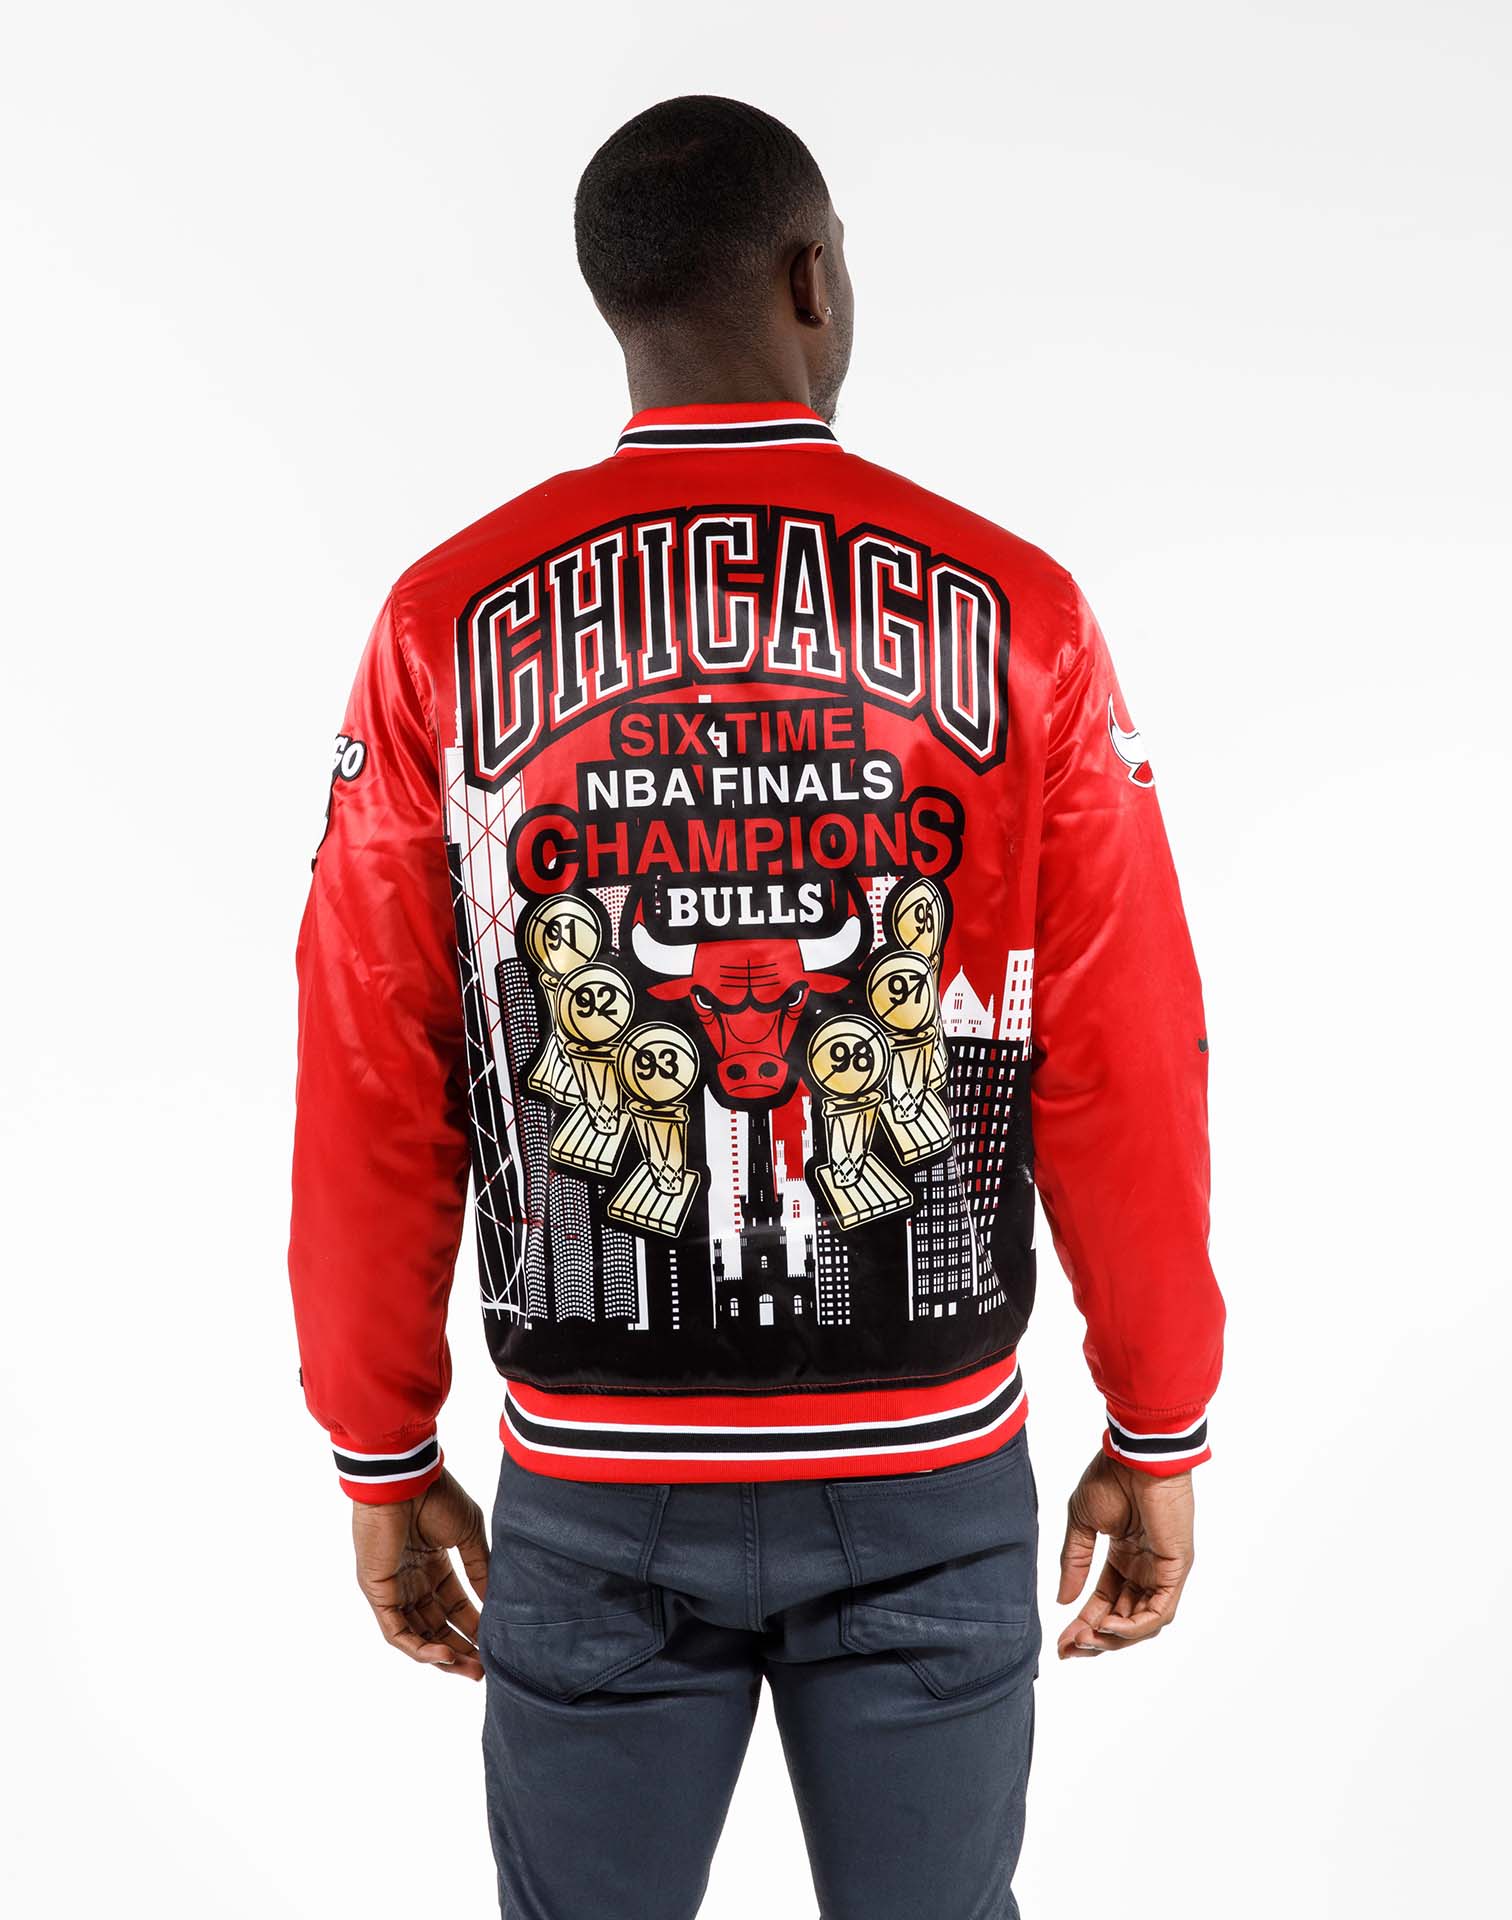 Maker of Jacket NBA Teams Jackets Chicago Bulls 6 Finals Time Champions